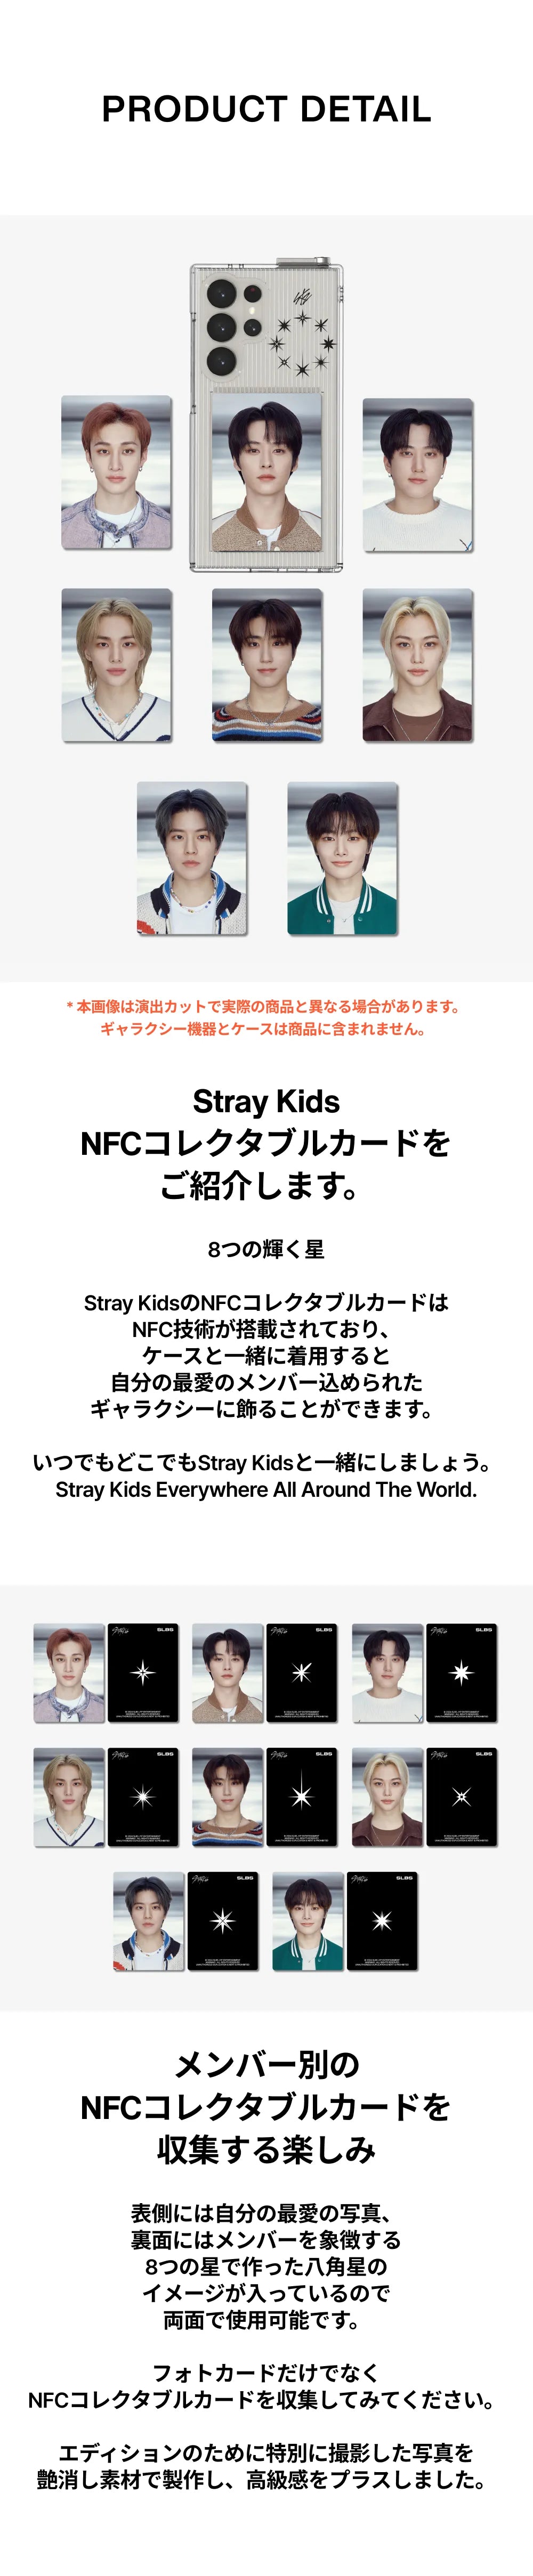 StrayKids NFC Collectable Card_SEUNGMIN